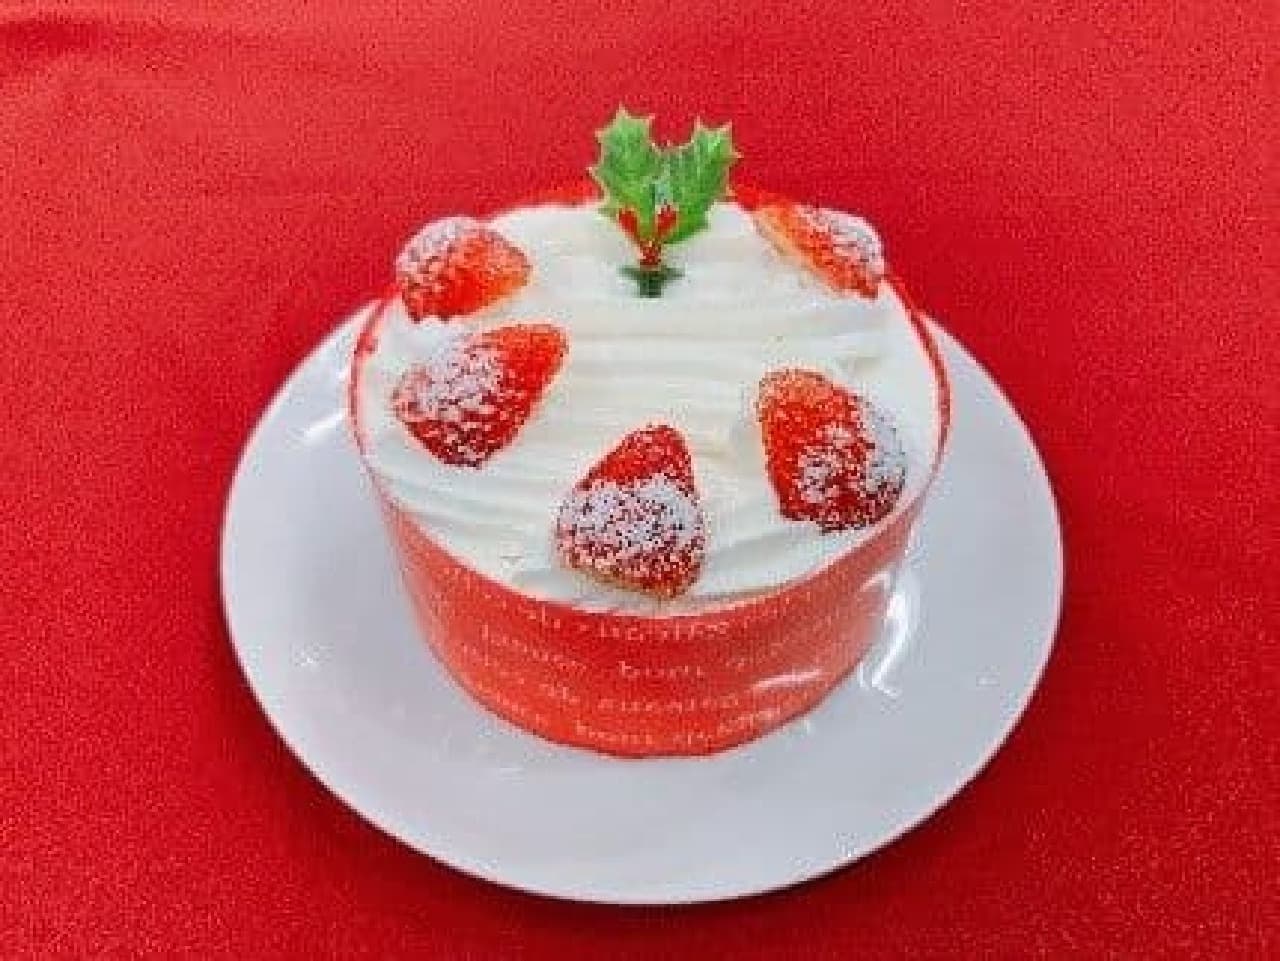 Aeon "Strawberry Christmas Cake No. 4"